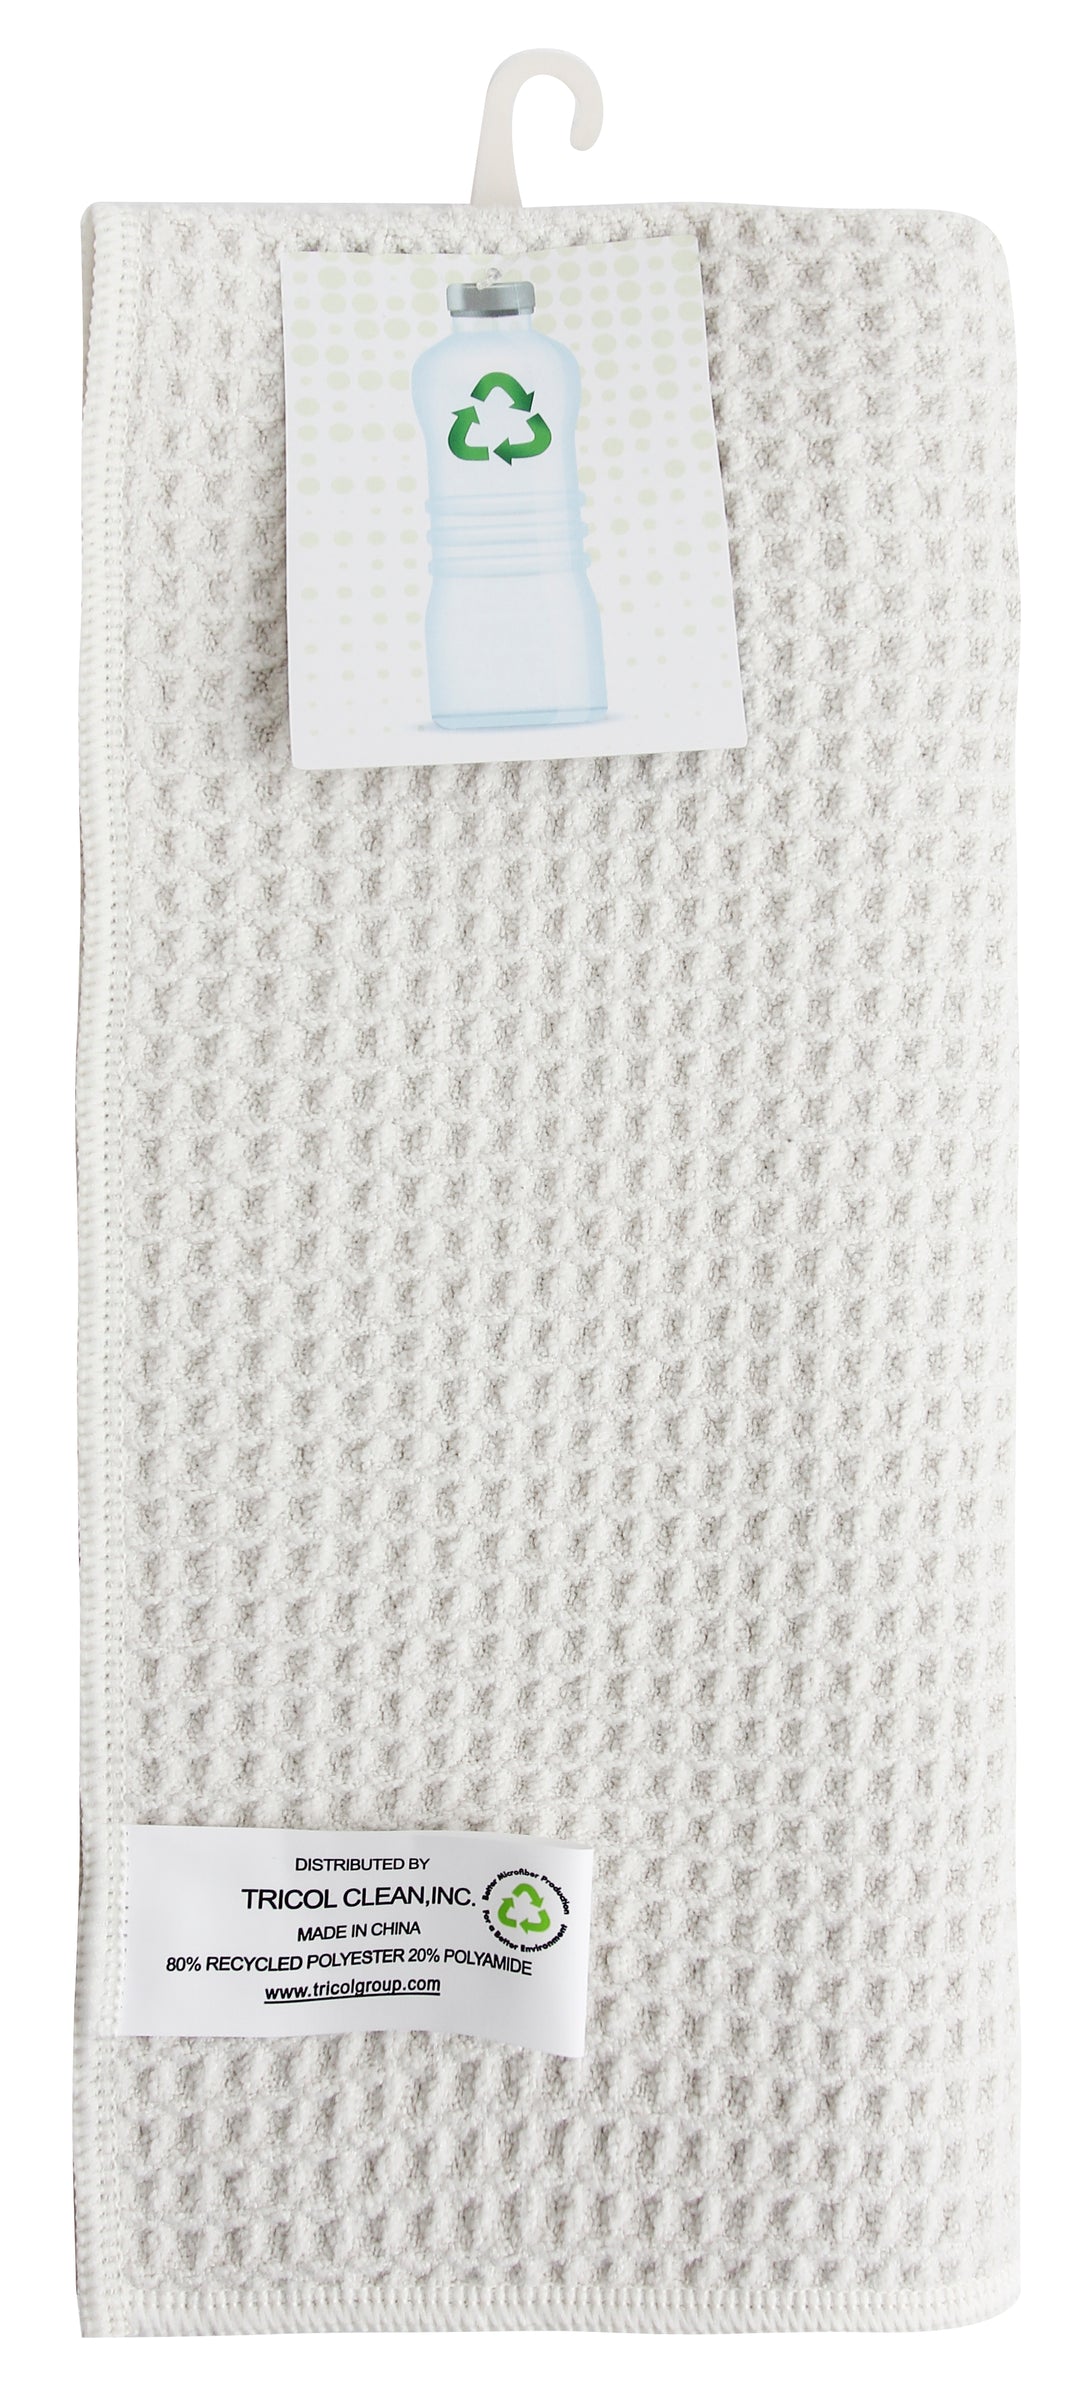 Microfiber Dish Cloth w/Scrubby Pocket – The Everplush Company